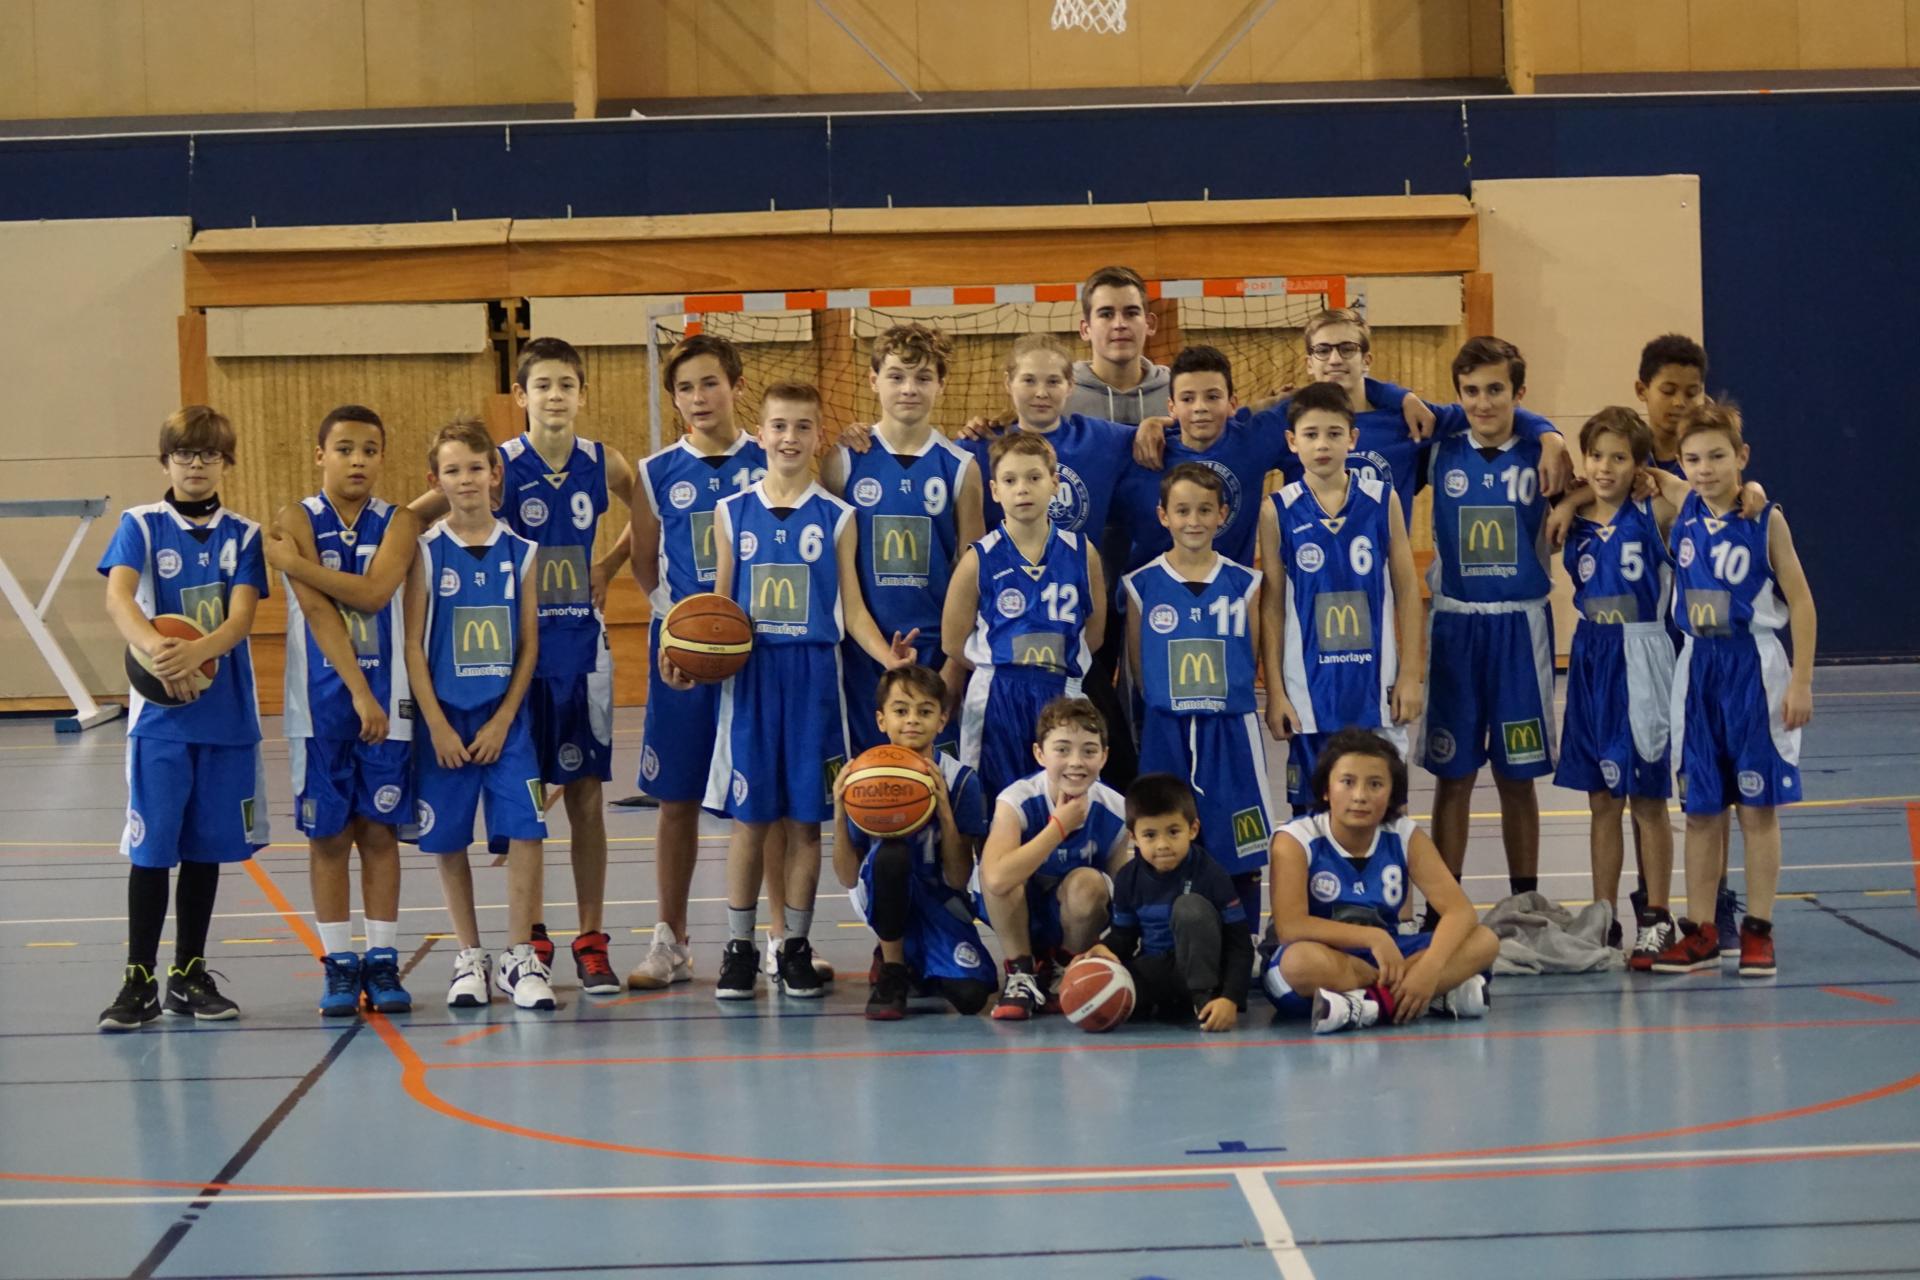 DEUX EQUIPES U13 Sud Basket Oise